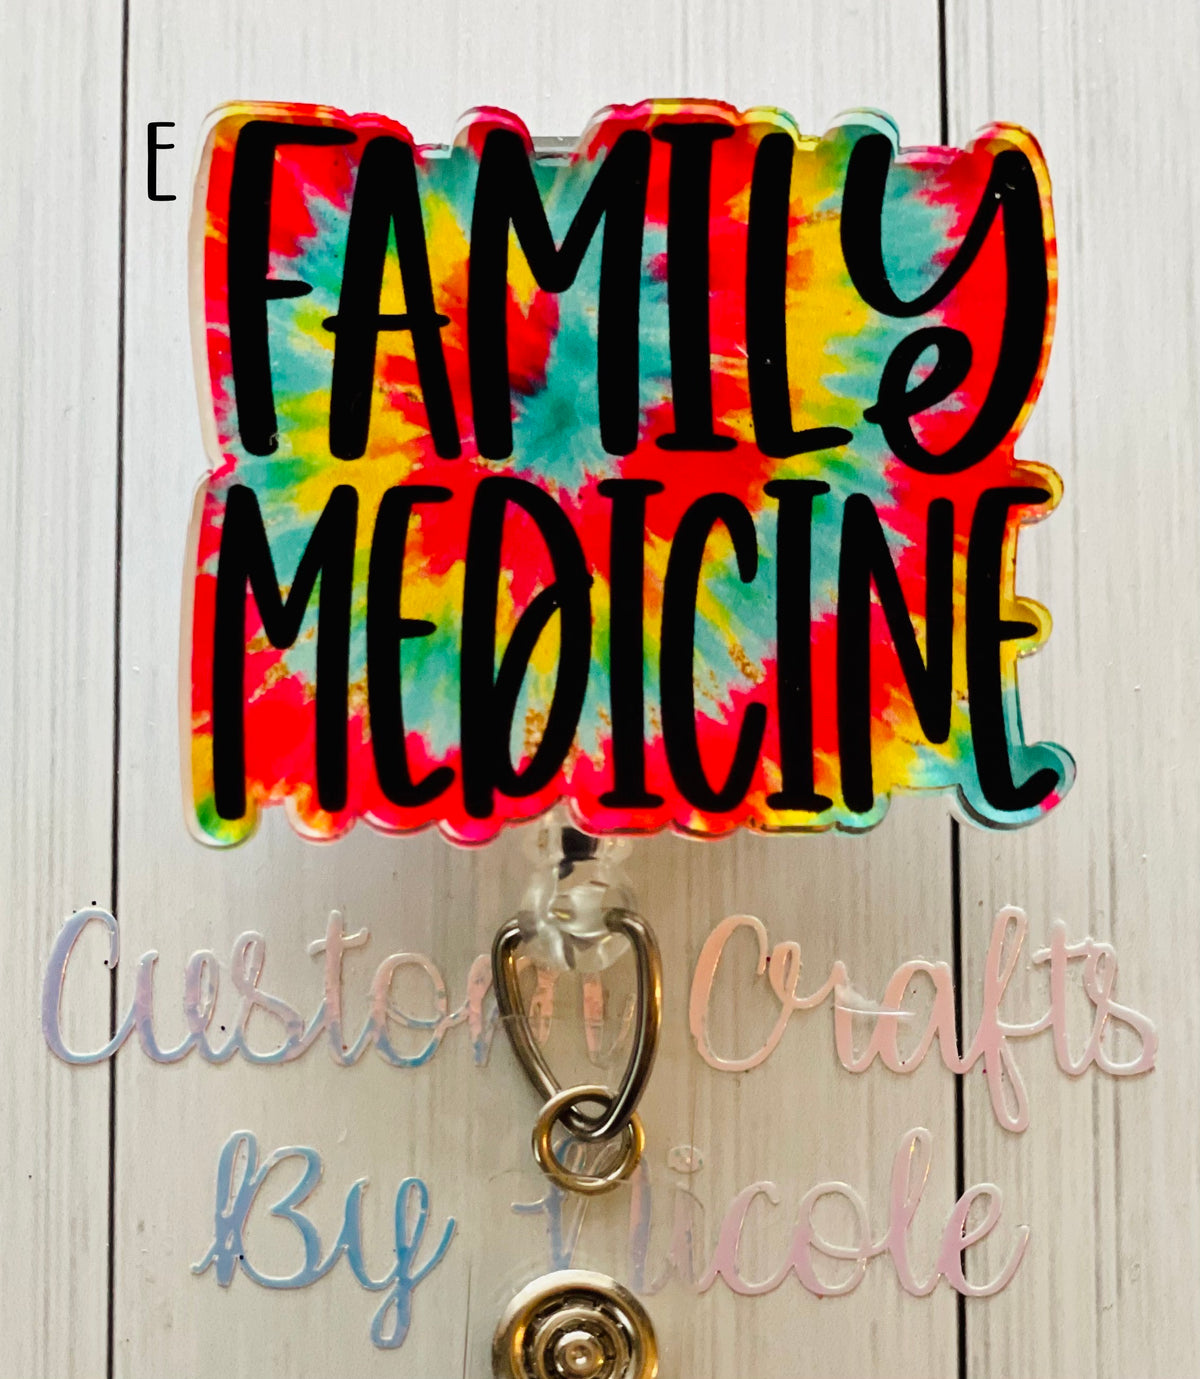 Family medicine